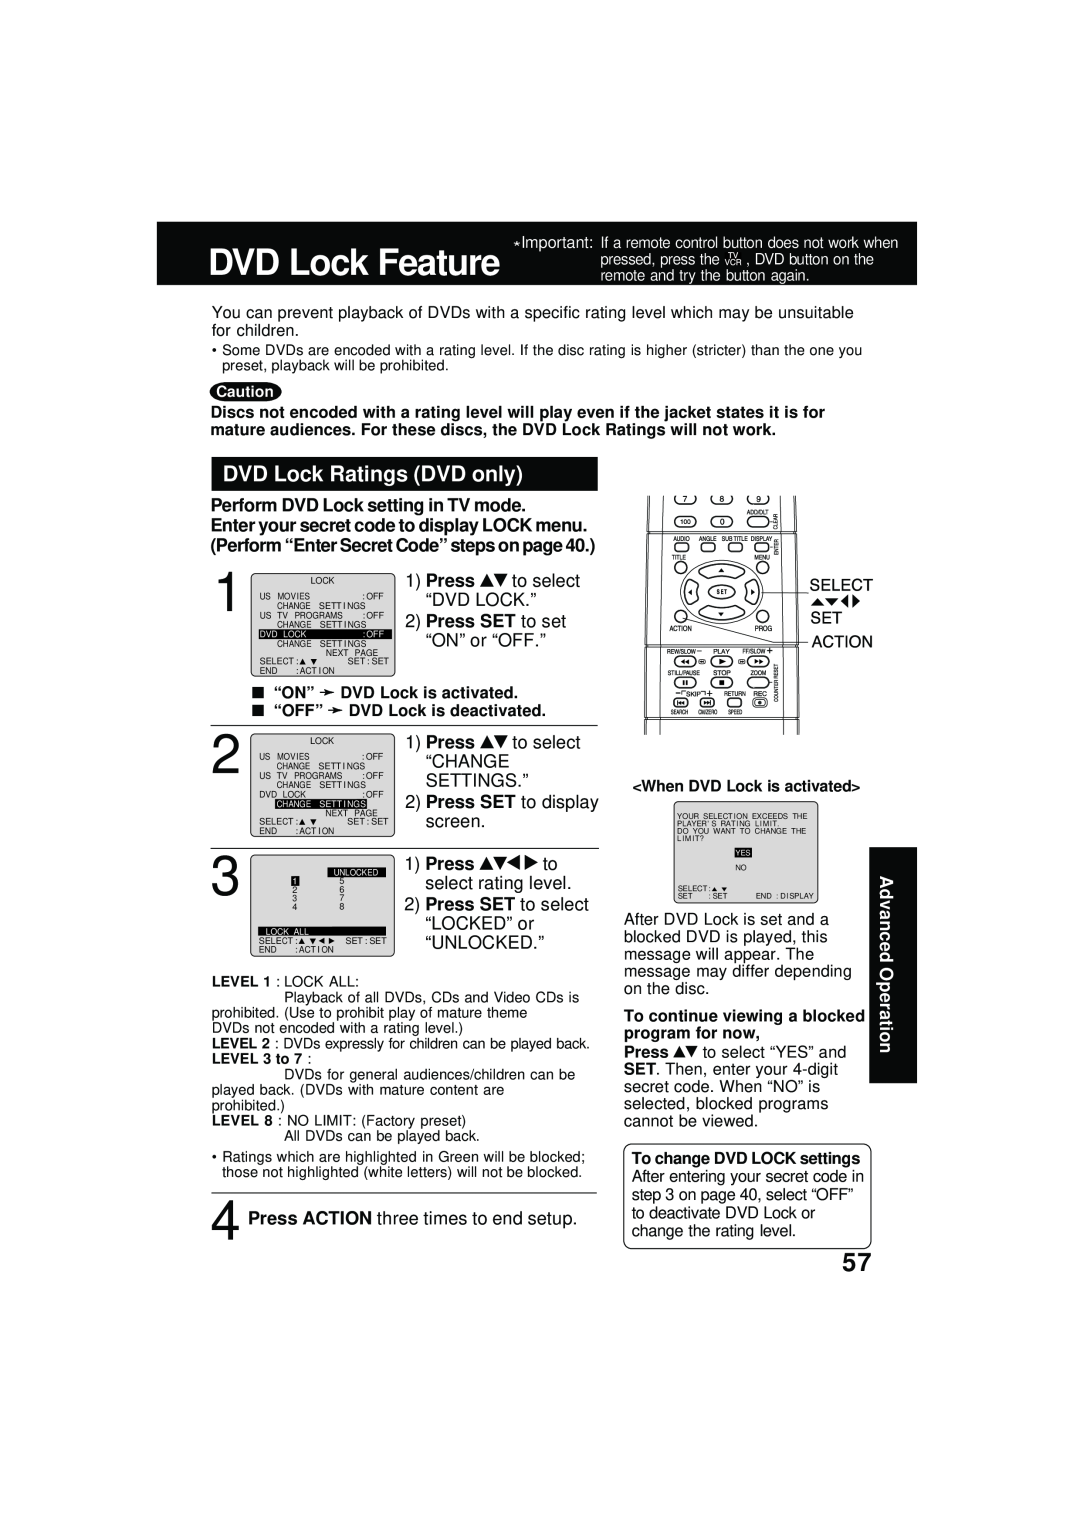 Panasonic PV DM2092 manual DVD Lock Ratings DVD only, Perform DVD Lock setting in TV mode, Press SET to set 